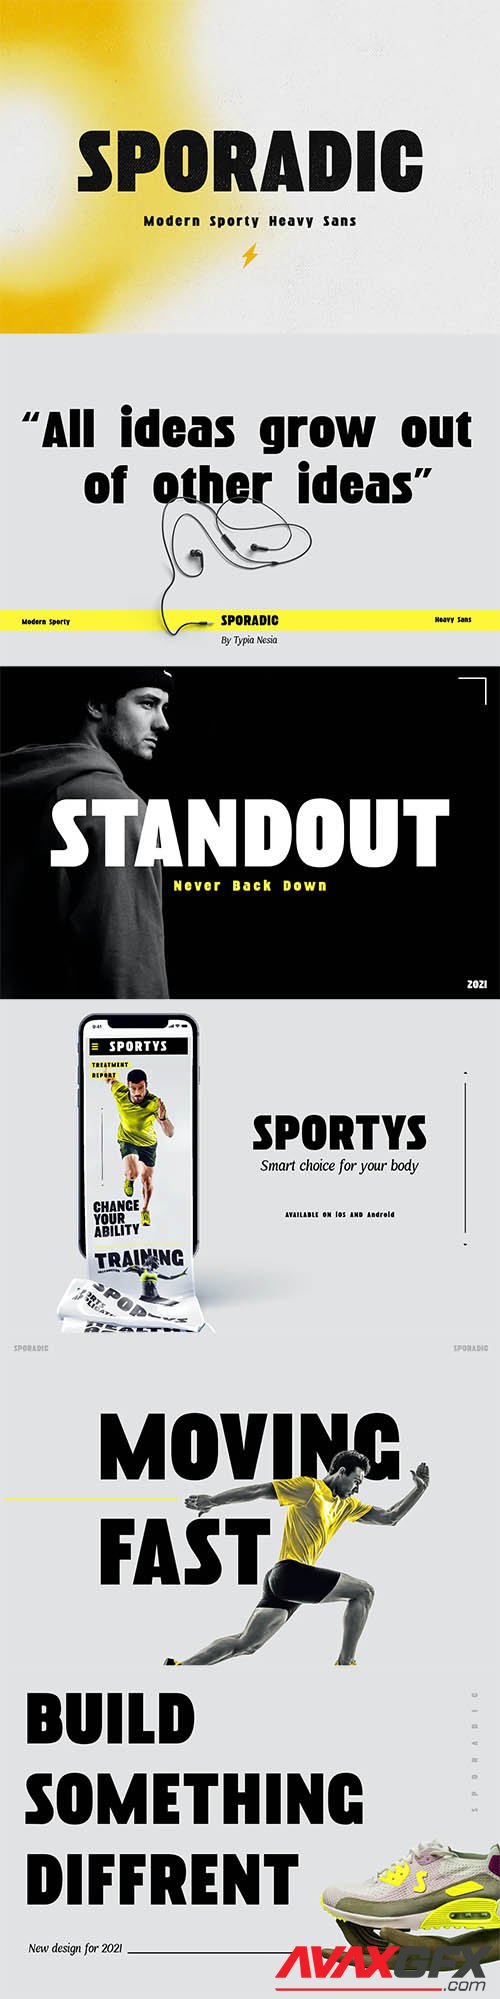 Sporadic - Modern Sport Sans